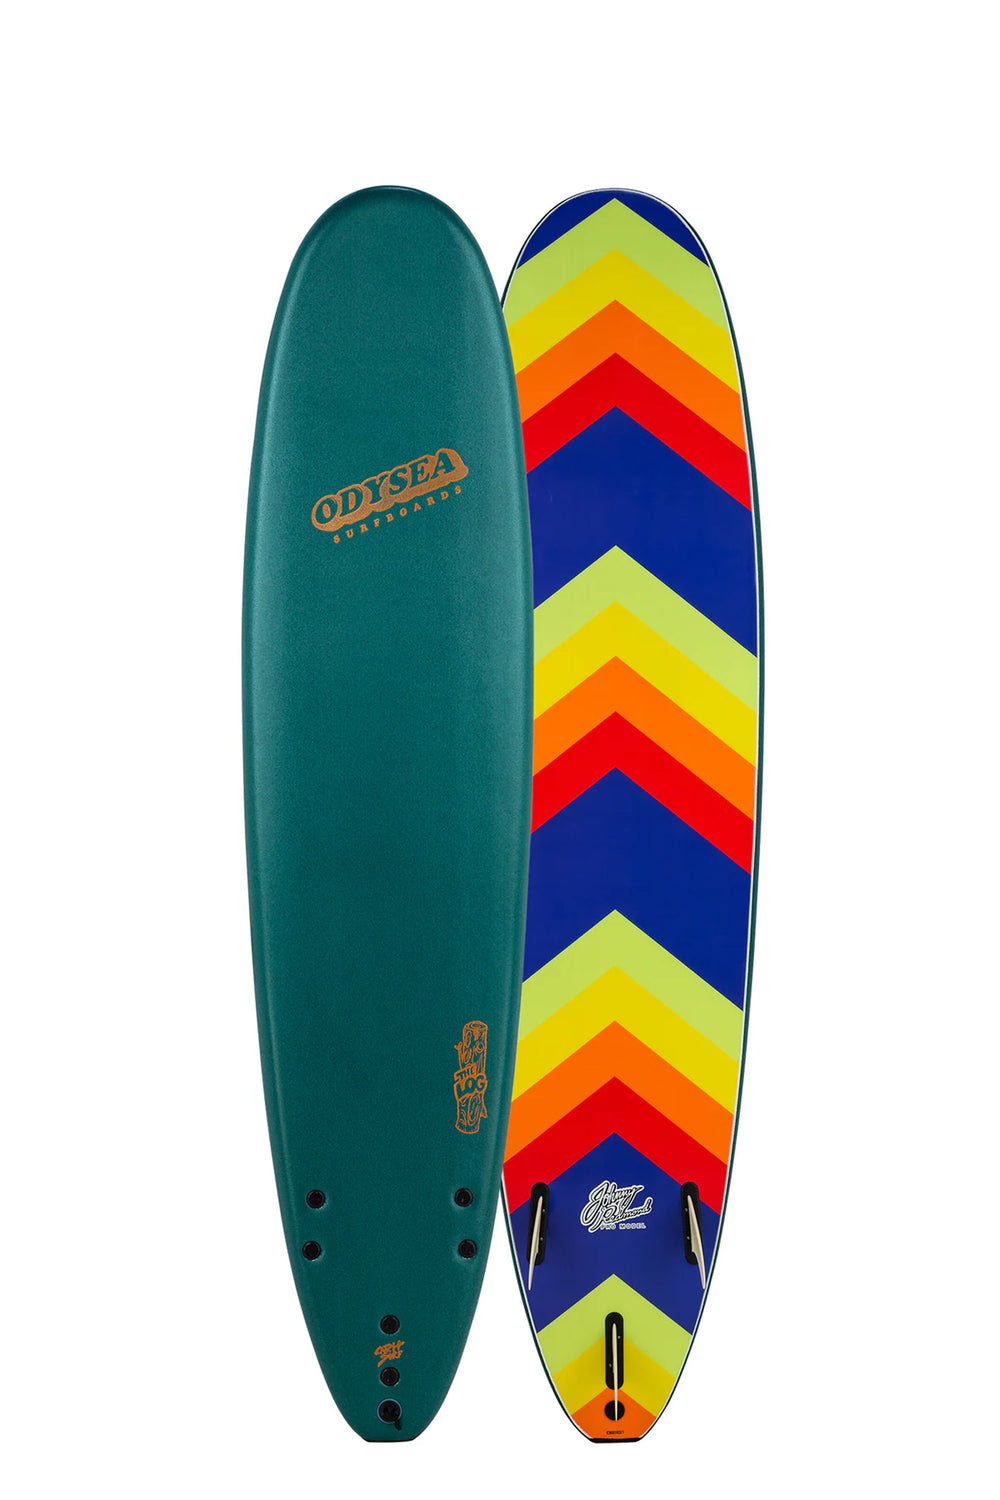 Pukas-Surf-Shop-Catch-Surfboards-Odysea-Johnny-Redmond-Pro-8_0